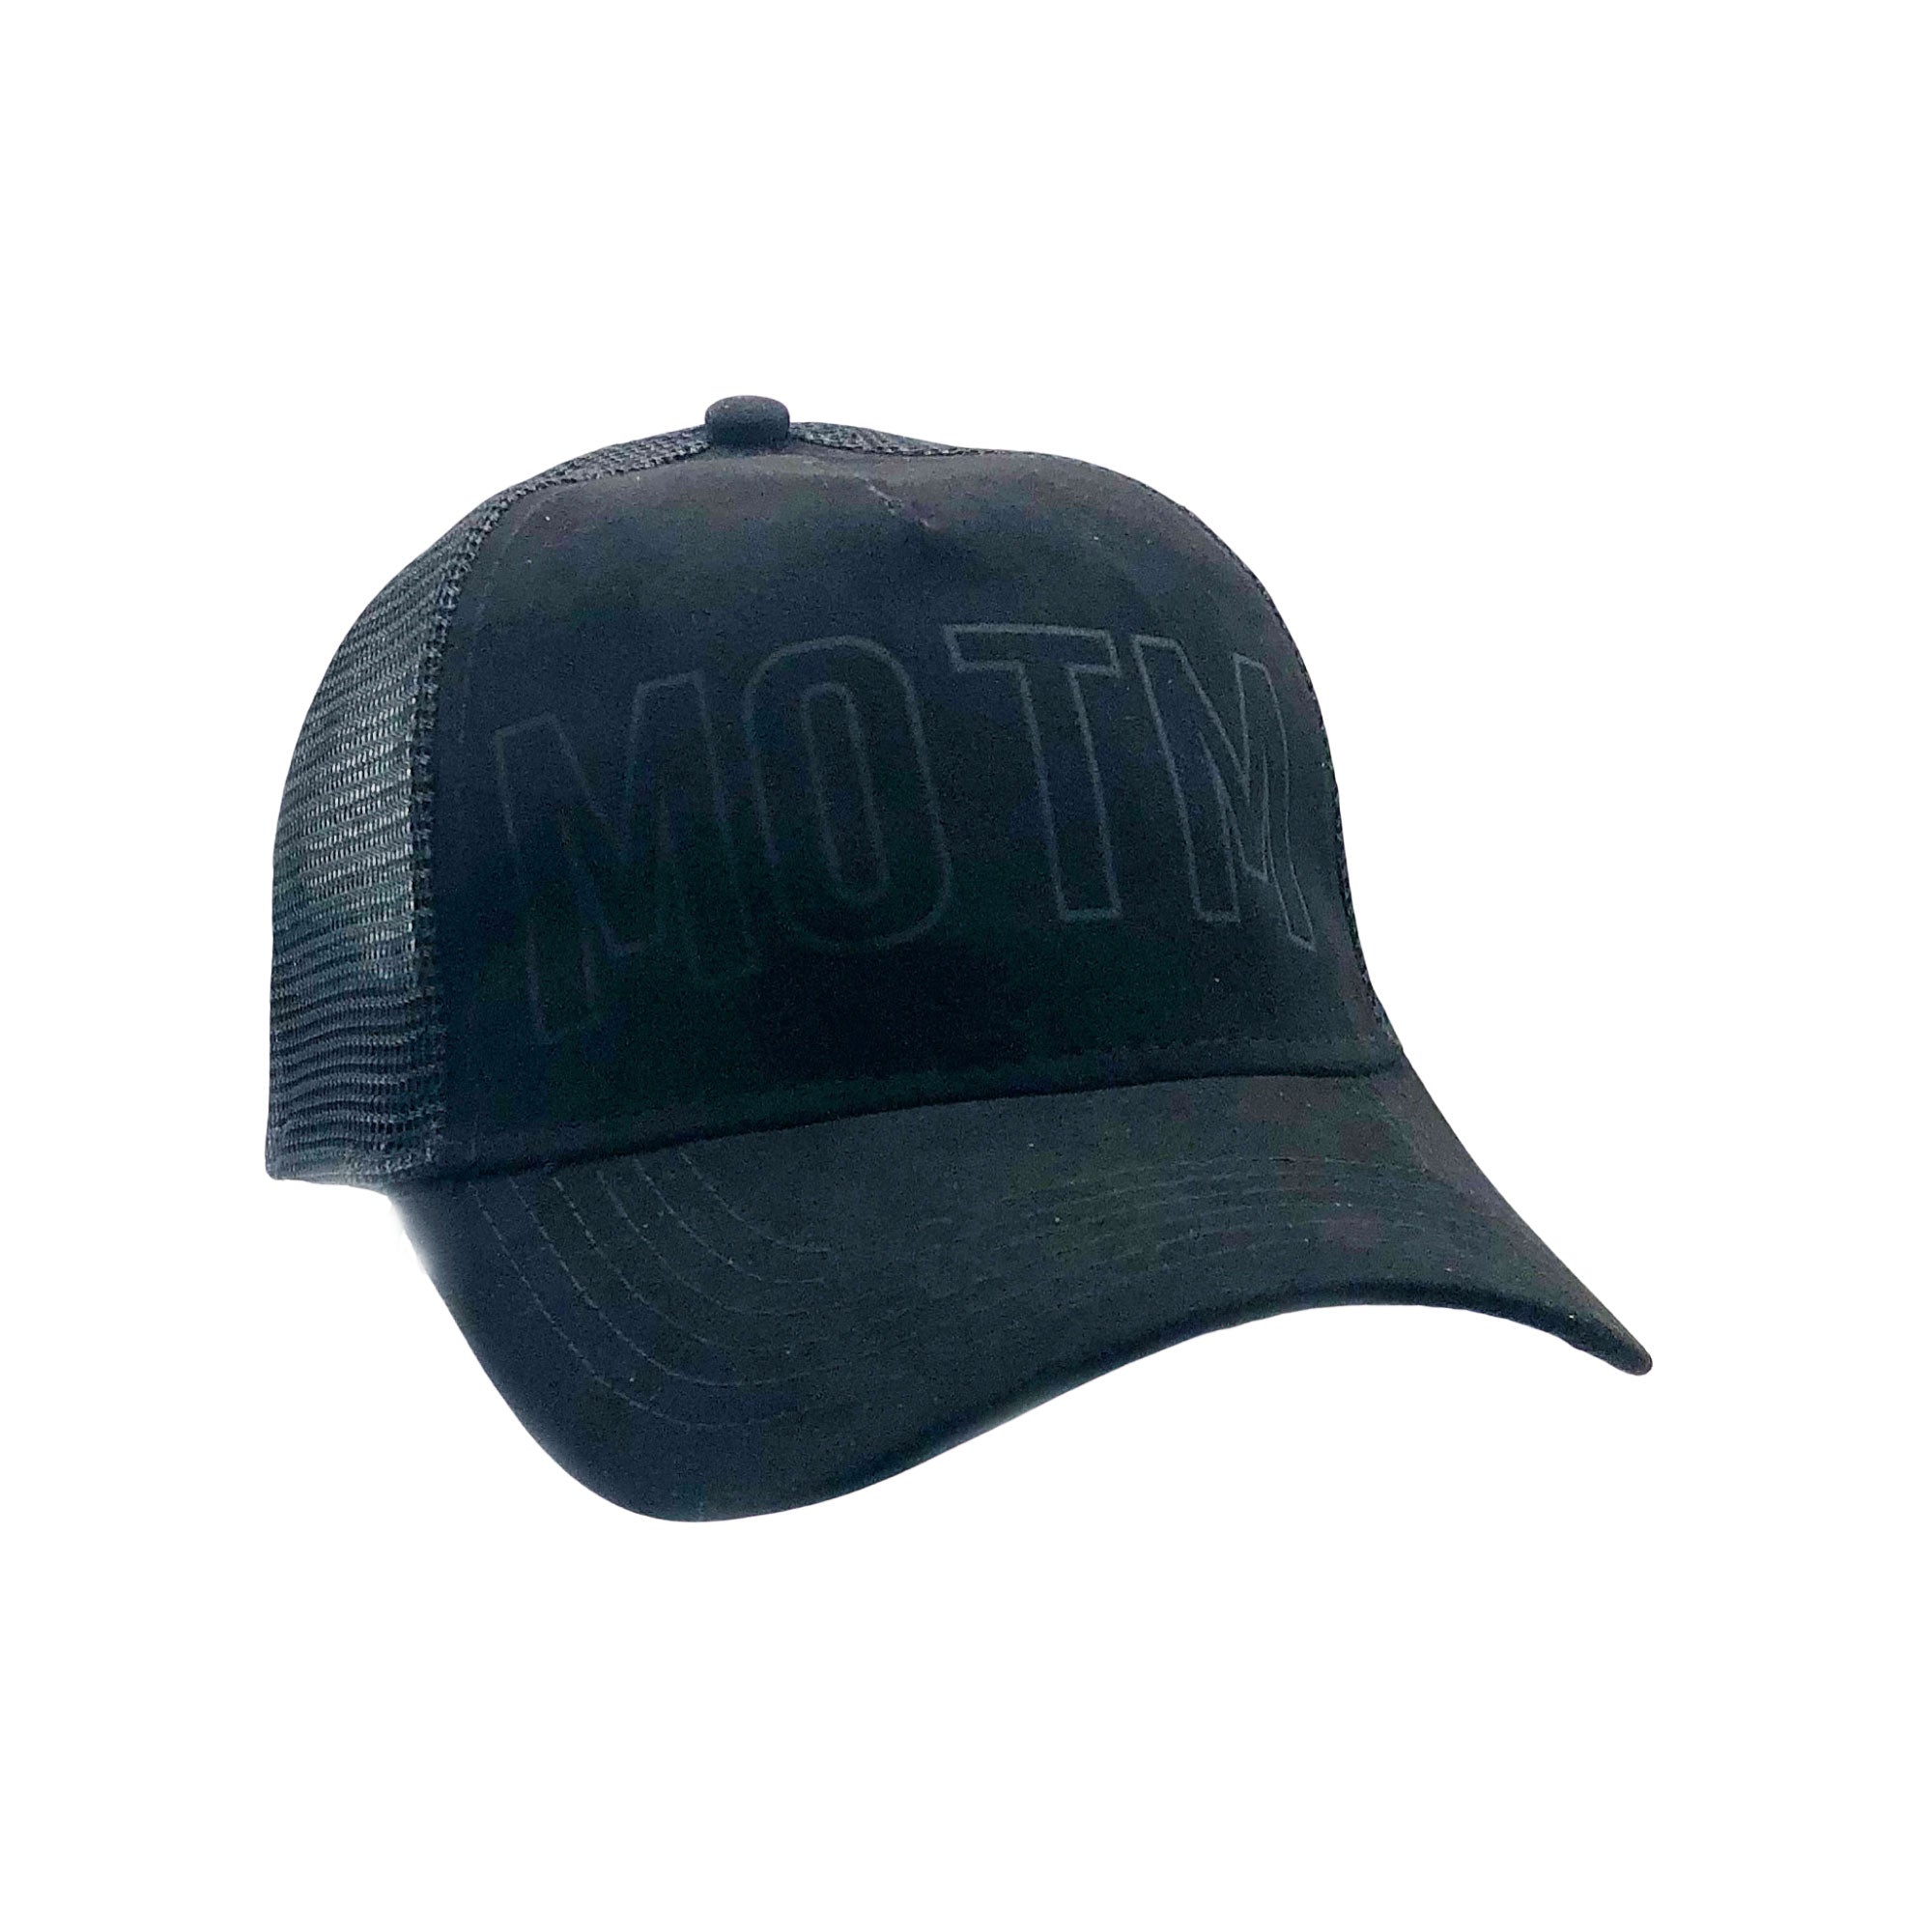 MAN OF THE MATCH® Official Cap - MOTM Laser Branded - Black Suede Cap